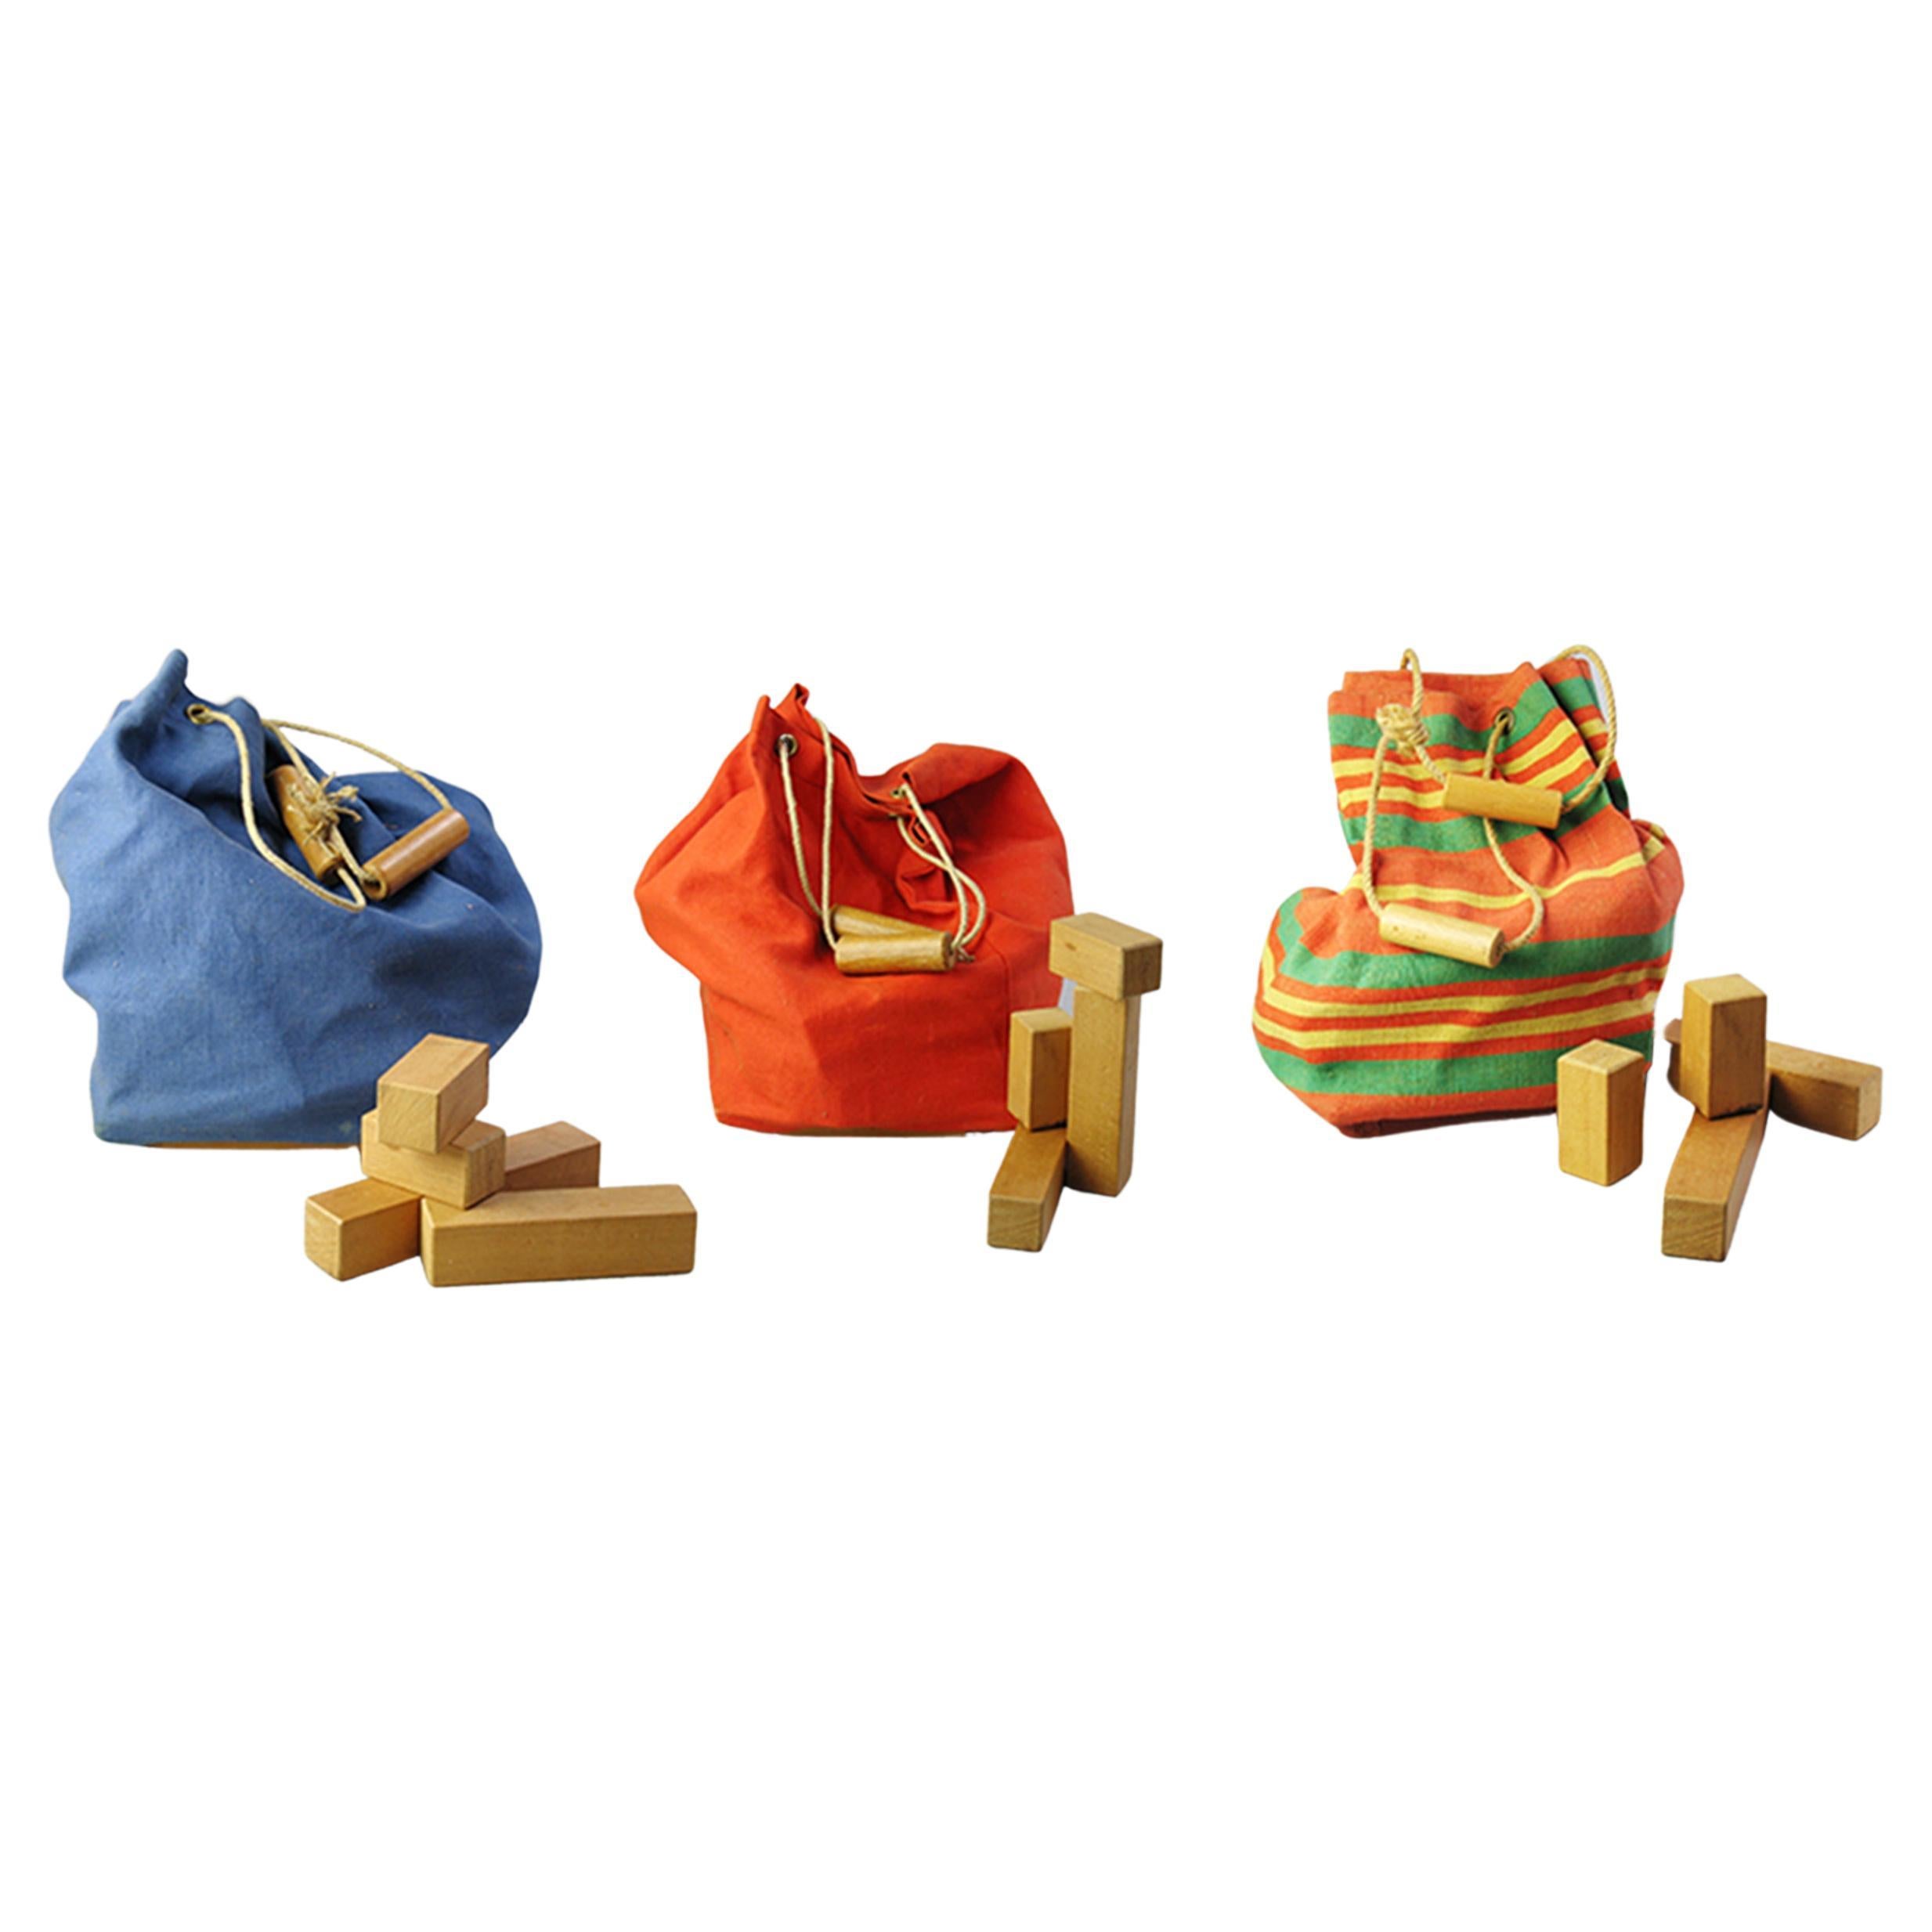 3 x ADO Ko Verzuu Children Toy Blocks bag, De Stijl, the Netherlands, 1950's